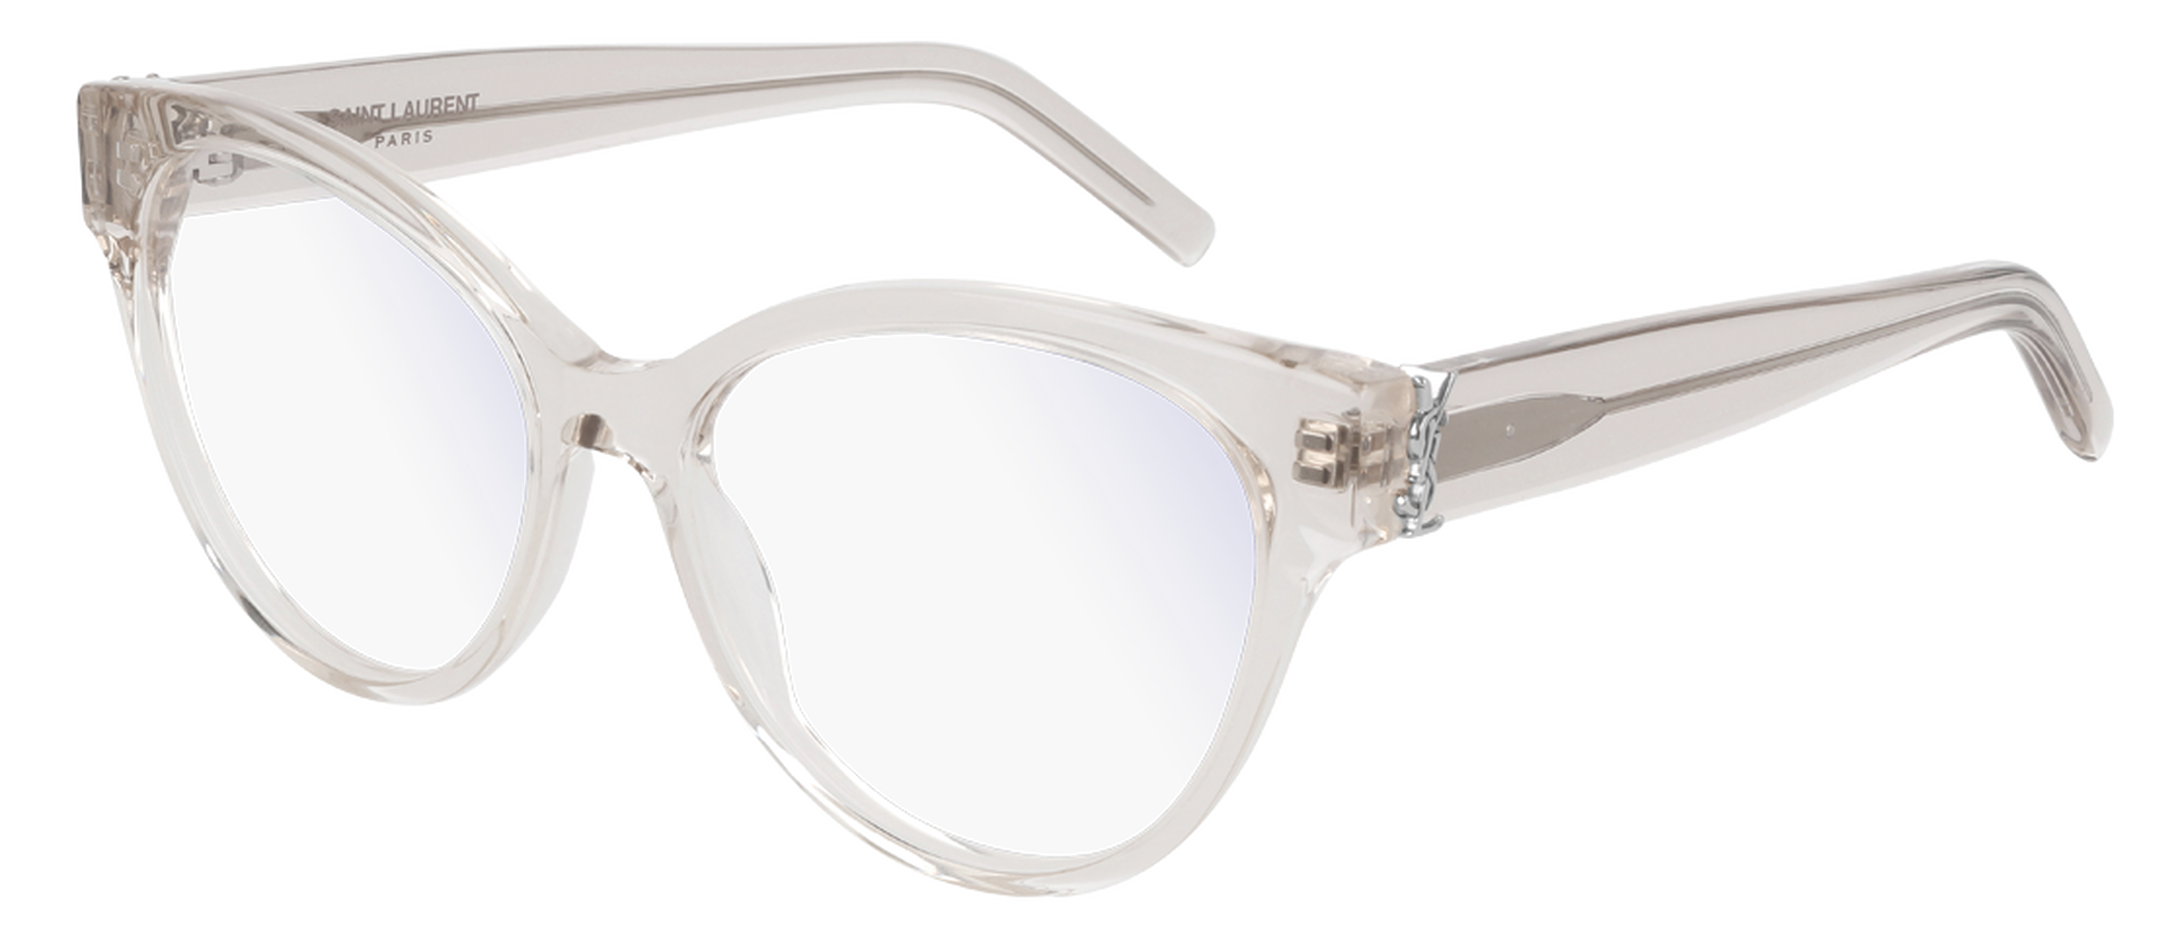 Saint Laurent SL M34 Glasses | Free Shipping and Returns | Eyeconic